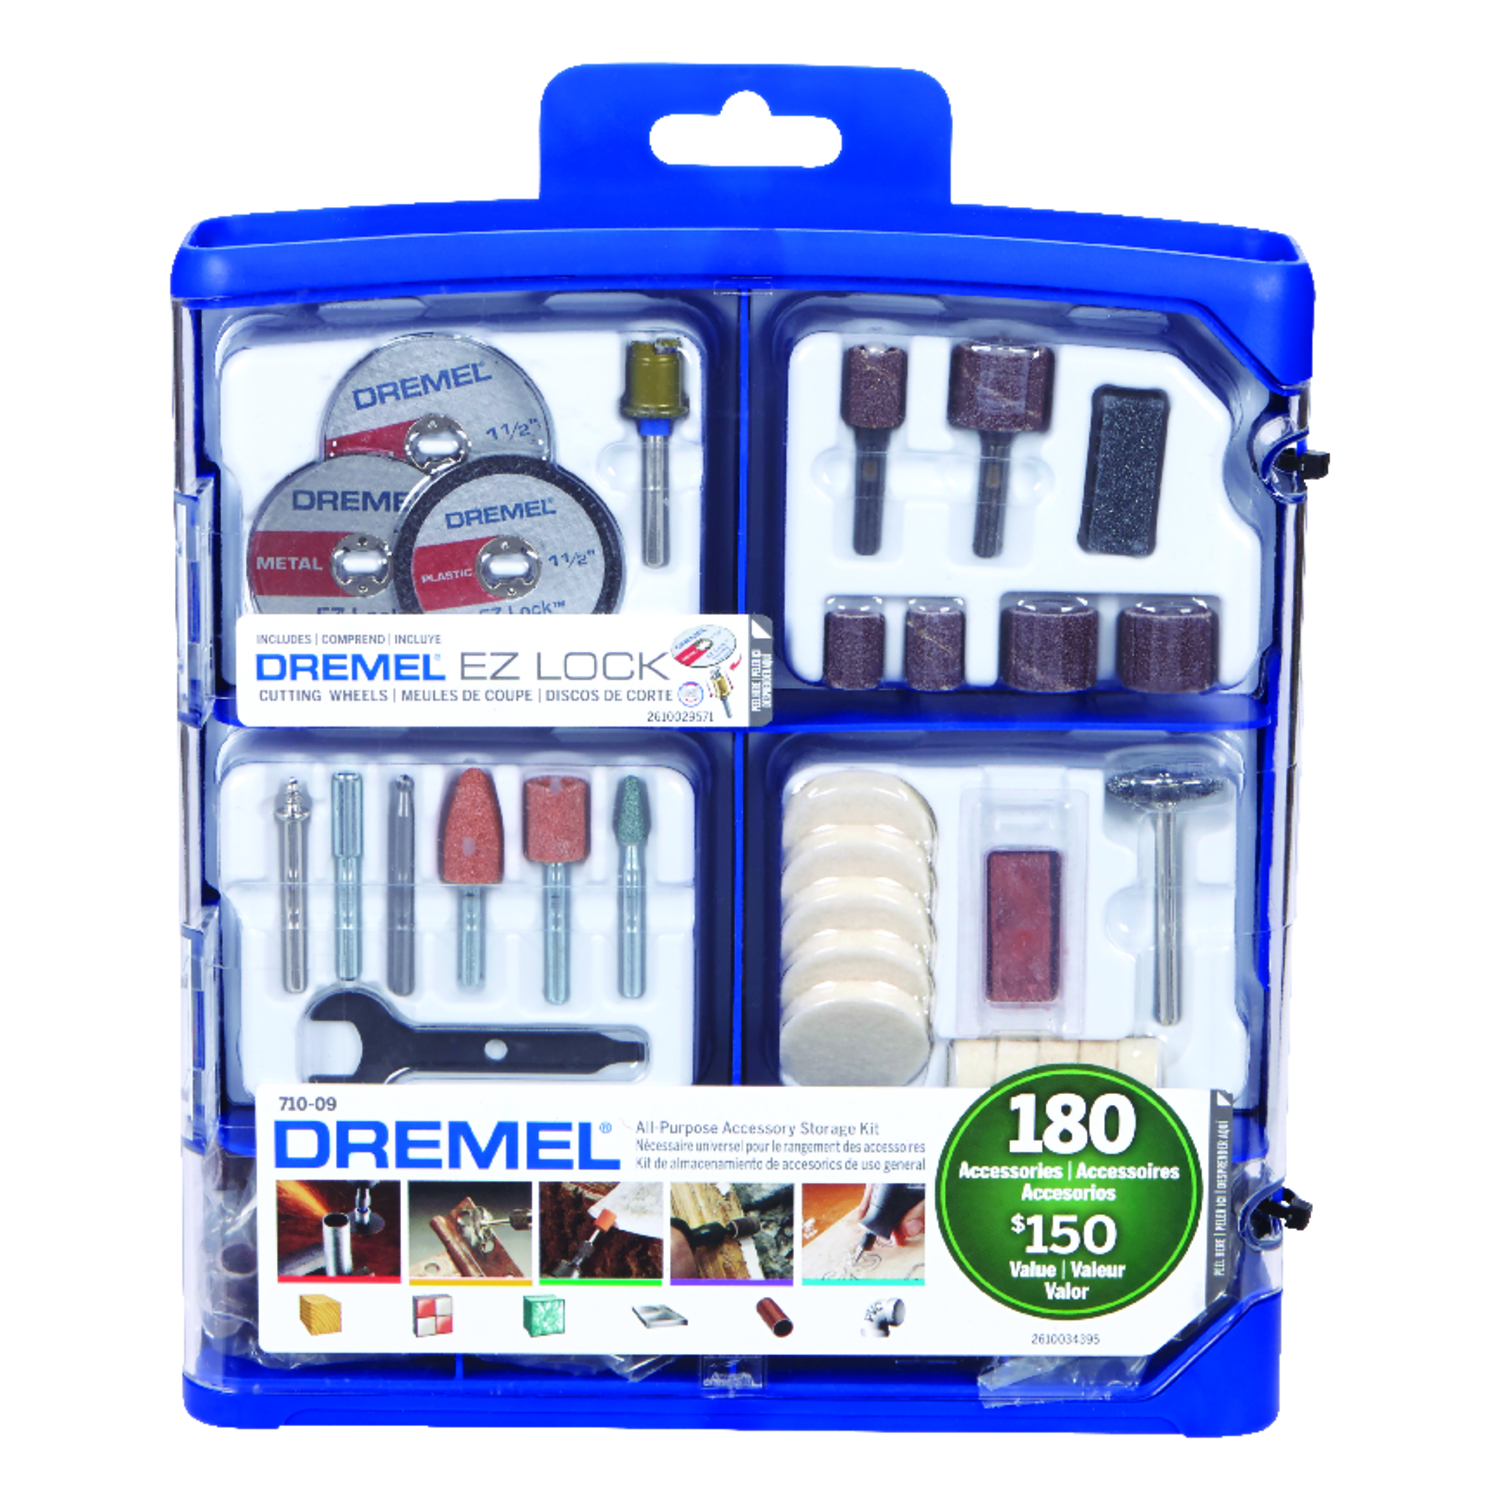 Photos - Tool Kit Dremel Metal Rotary Accessory Kit 160 pk 710-09 